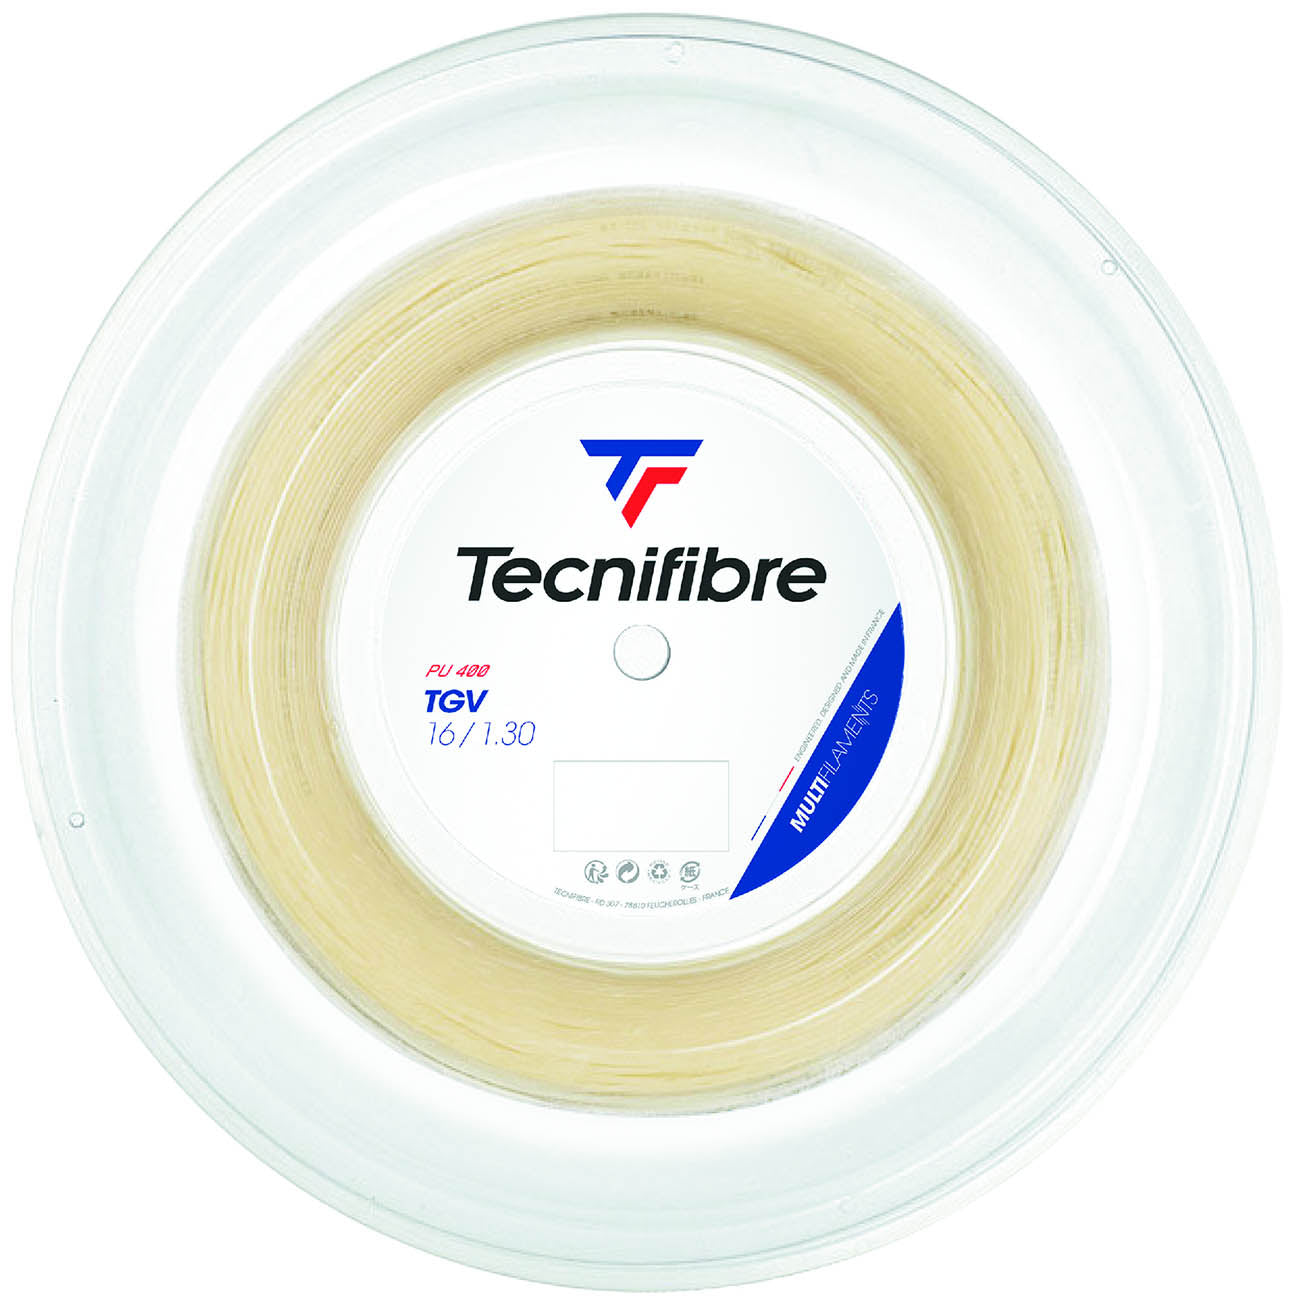 Tecnifibre TGV Tennis String - 200m Reel from Sweatband.com